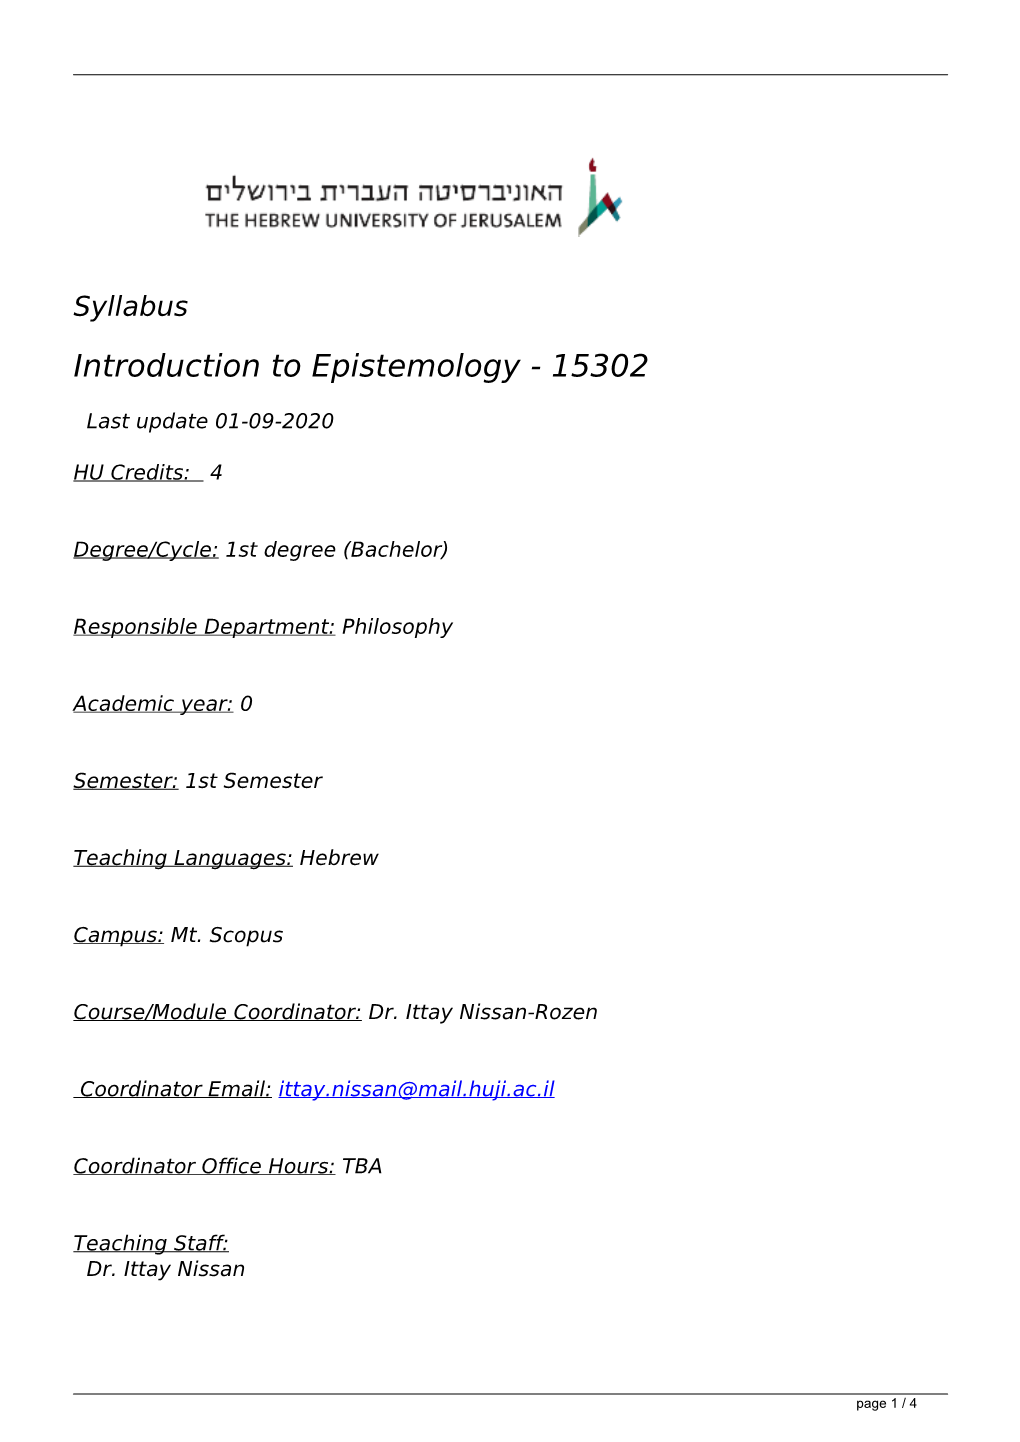 Introduction to Epistemology - 15302